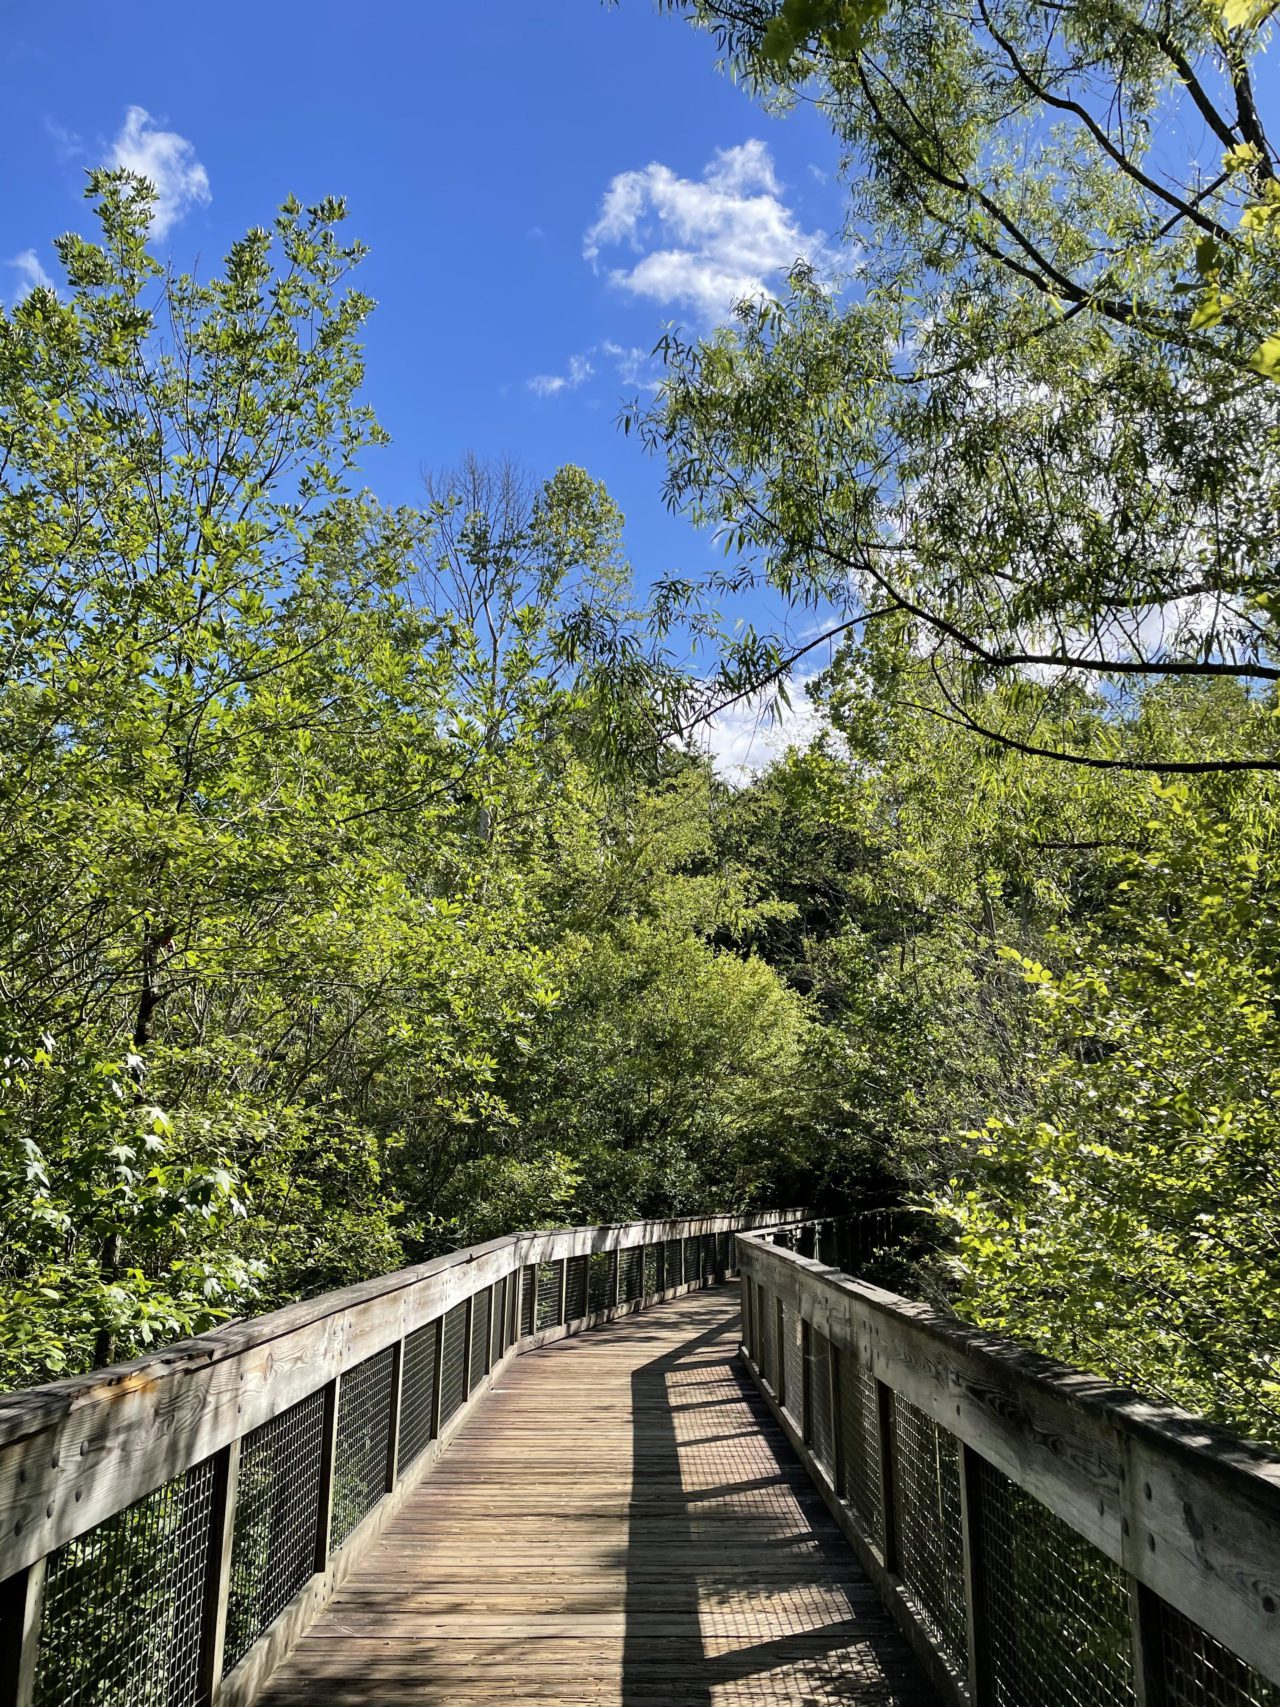 The boardwalk at George Piece Trail, a trail in George Piece Park in Atalanta, GA.